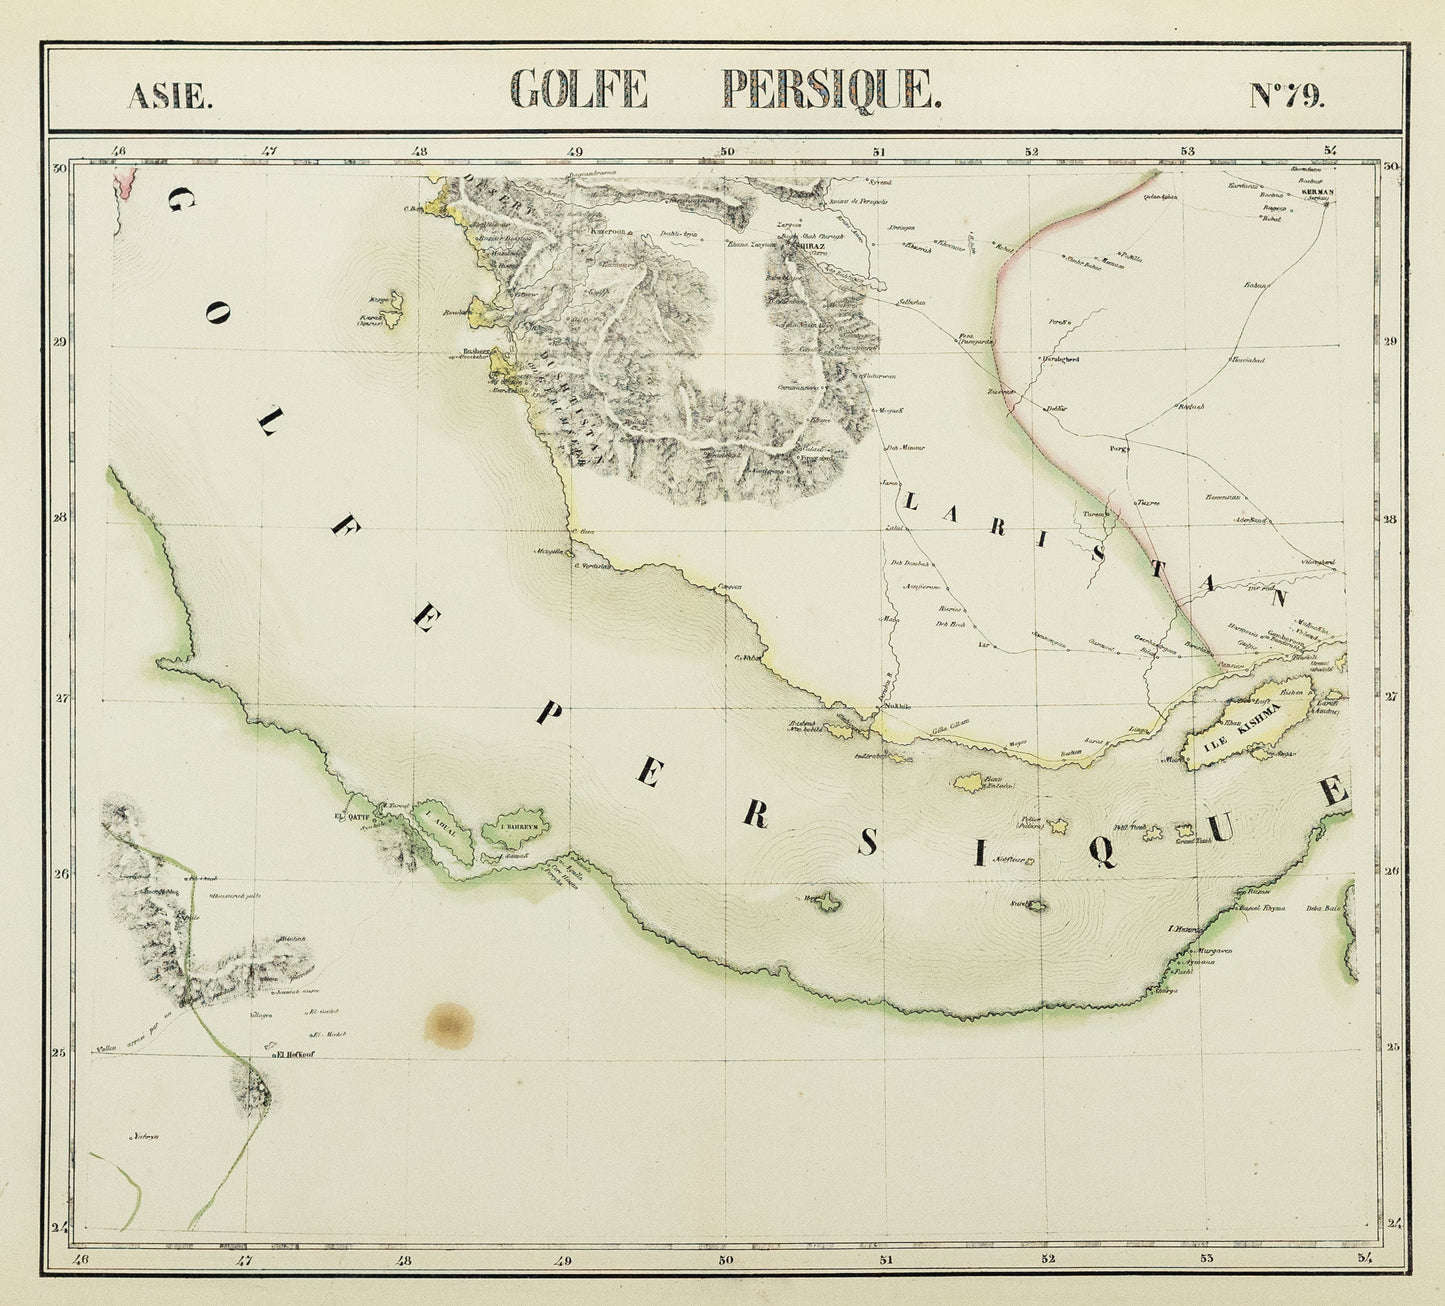 Vandermaelen, Philippe. Golfe Persique. Asie. No. 79. Brussels: c. 1827